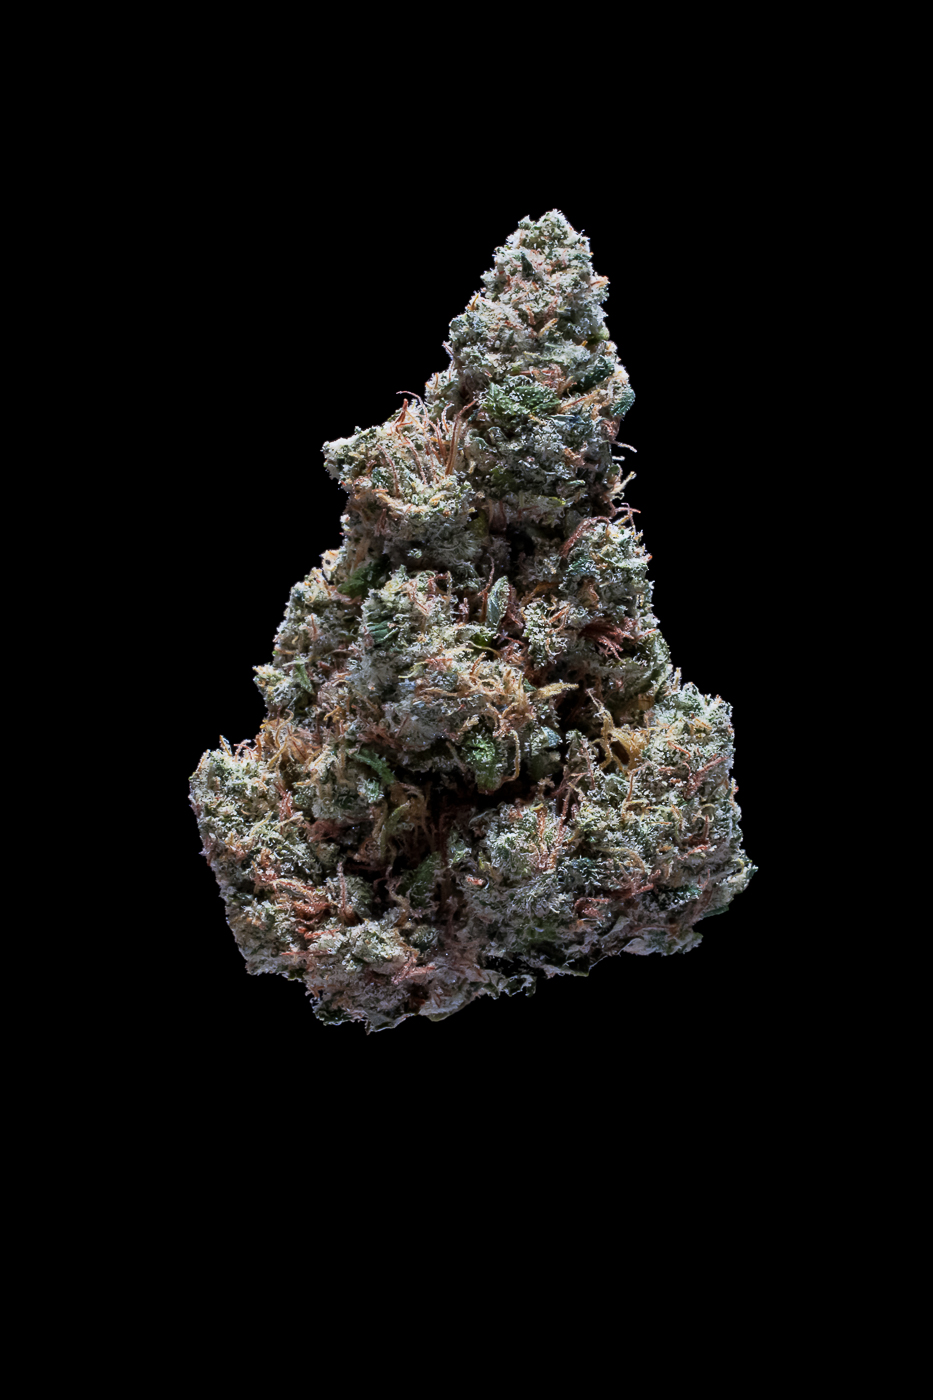 Dutch Treat, Lil Wayne's premium cannabis flowers